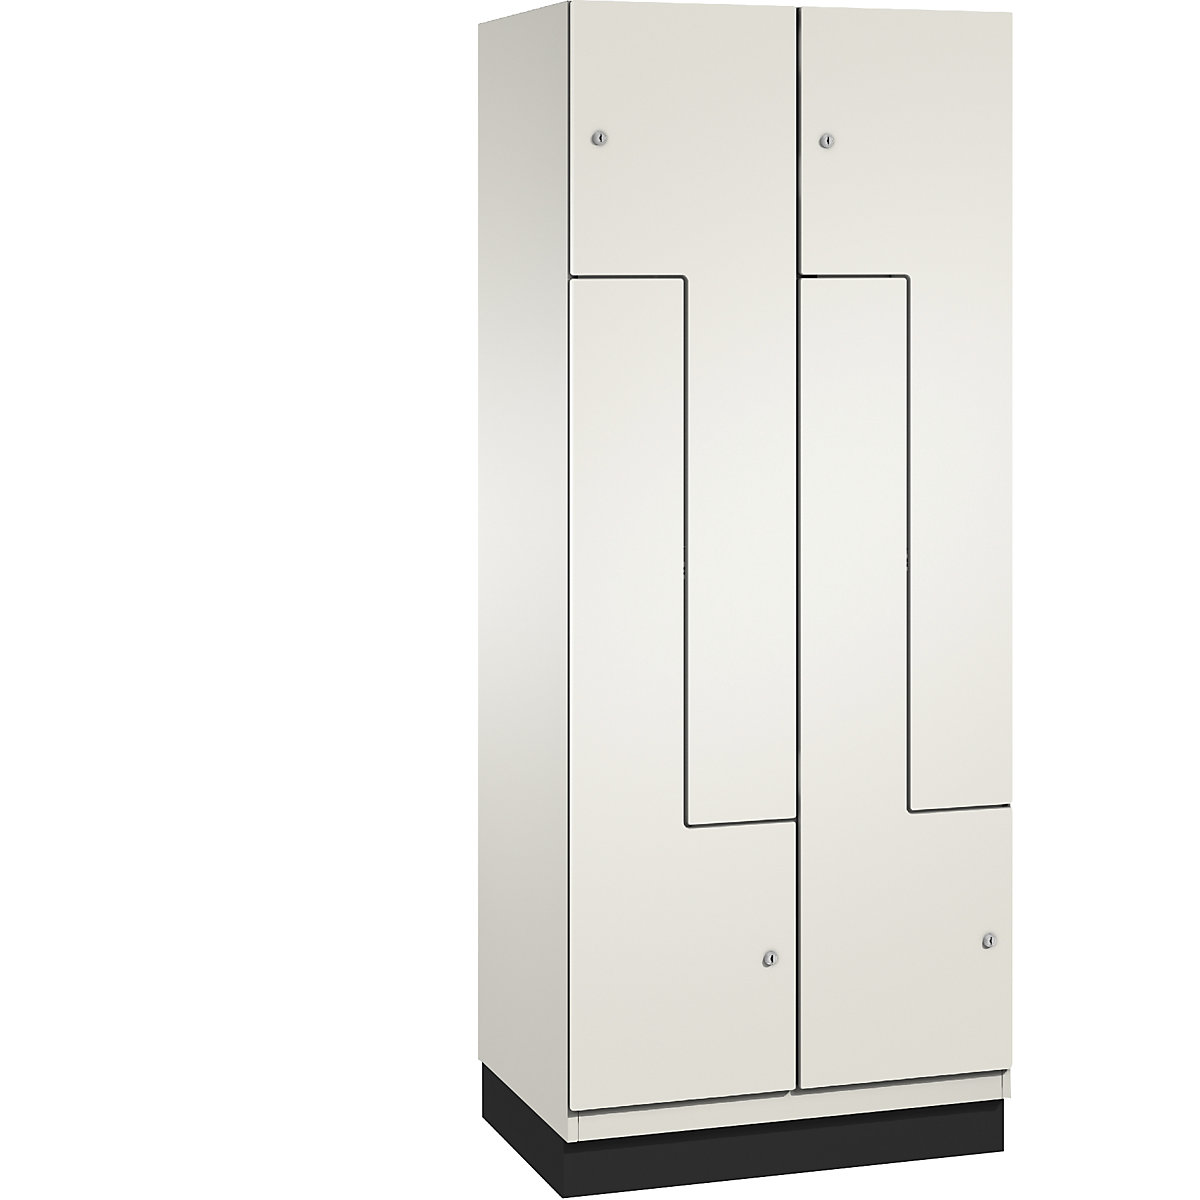 CAMBIO Z cloakroom locker unit – C+P